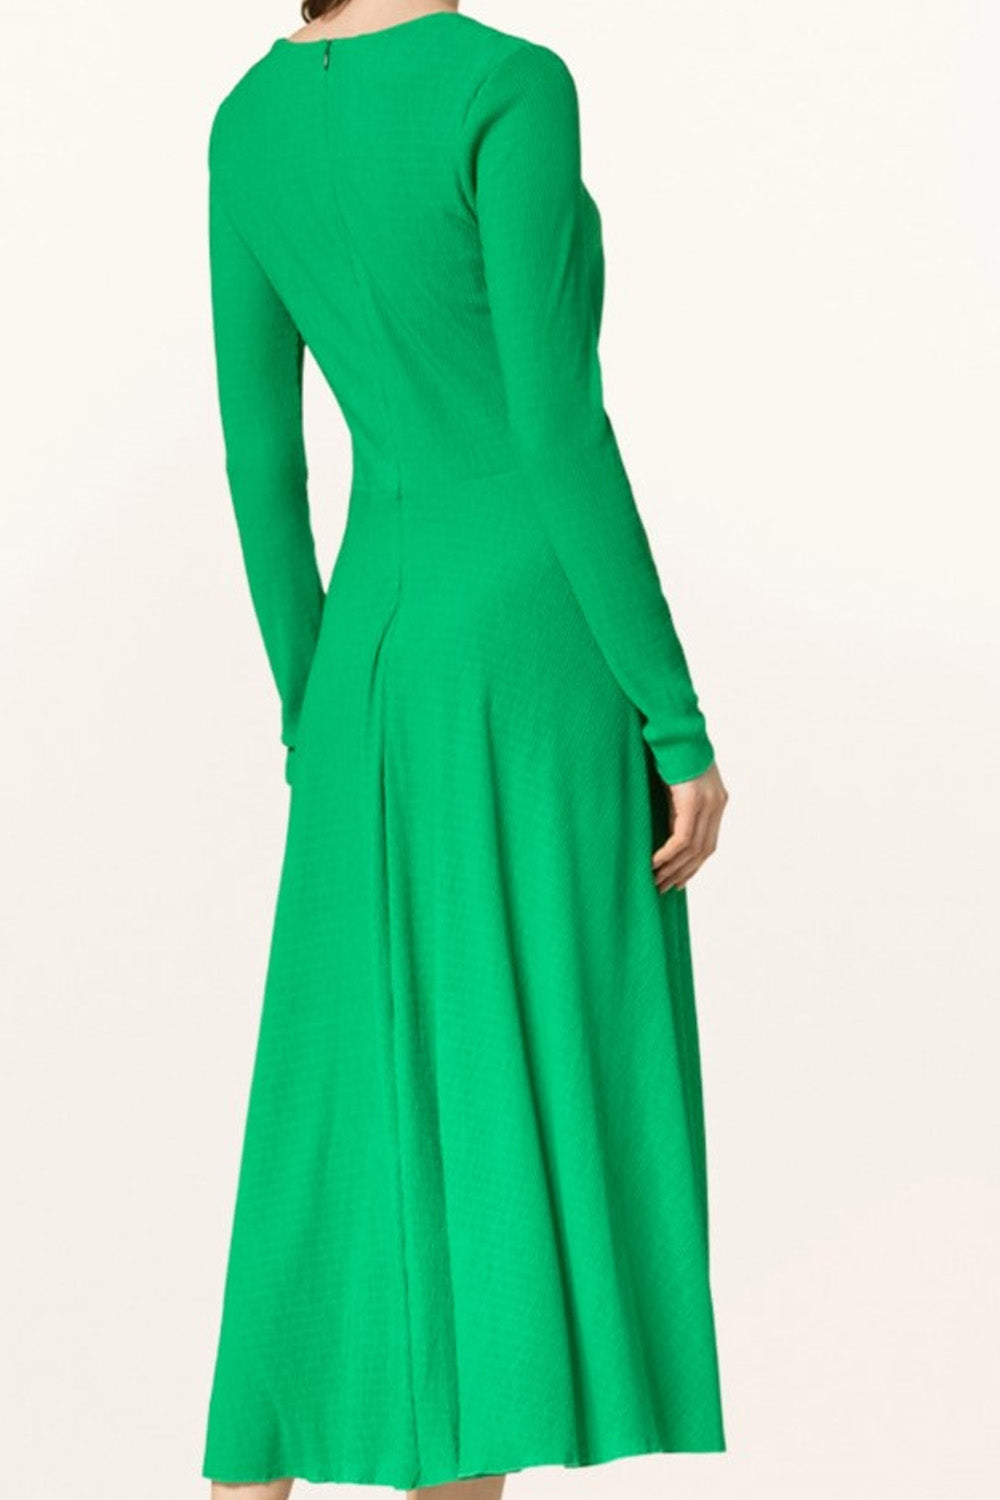 Elements Green Dress